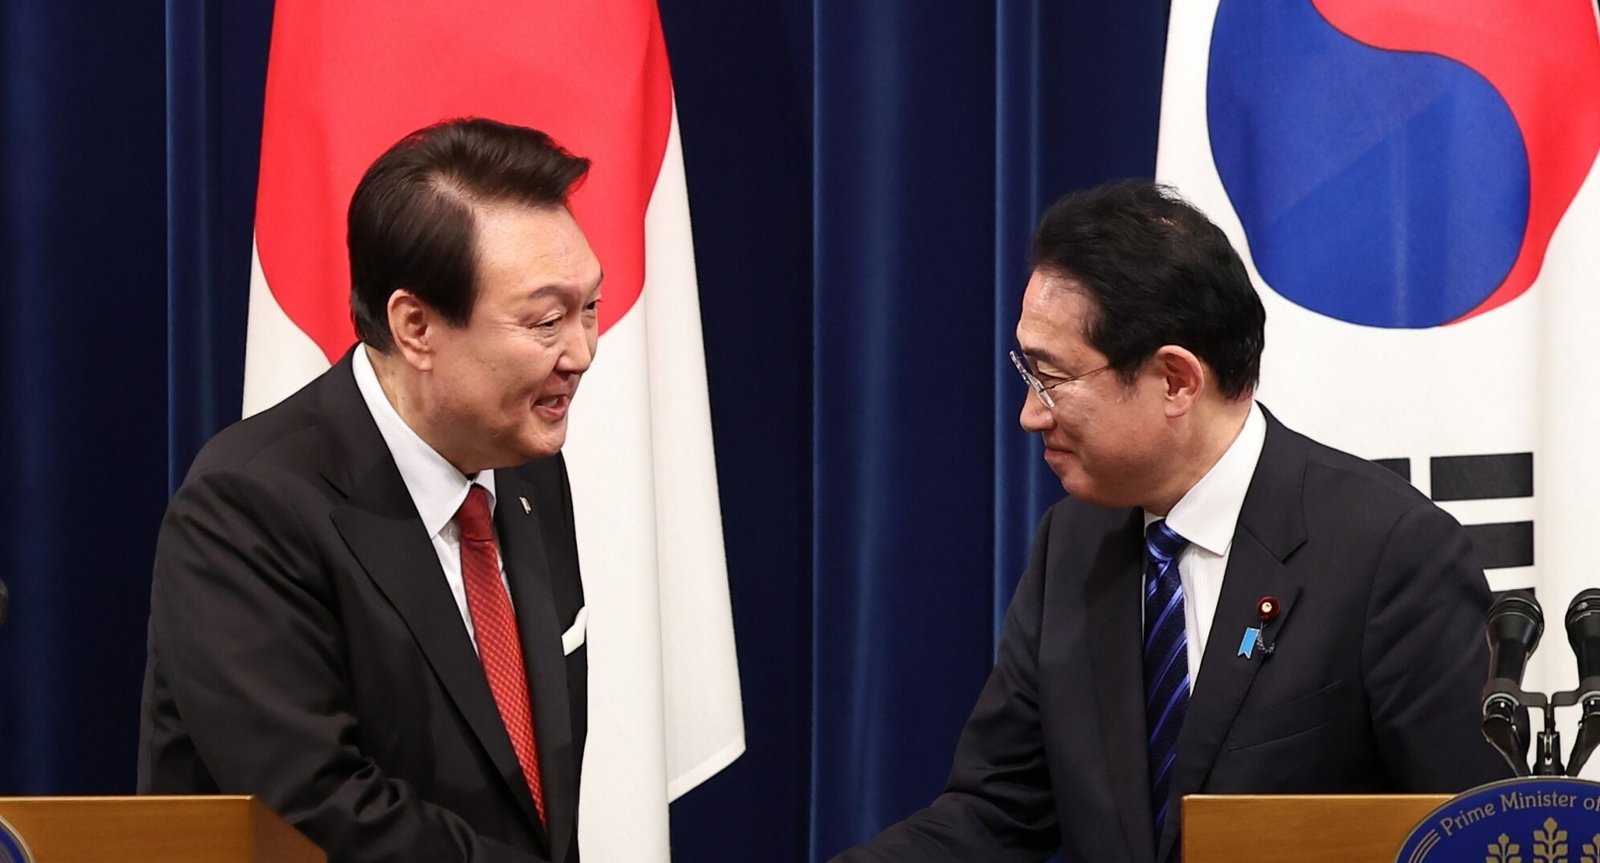 President Yoon Suk Yeol (L) shakes hands with Japanese Prime Minister Fumio Kishida